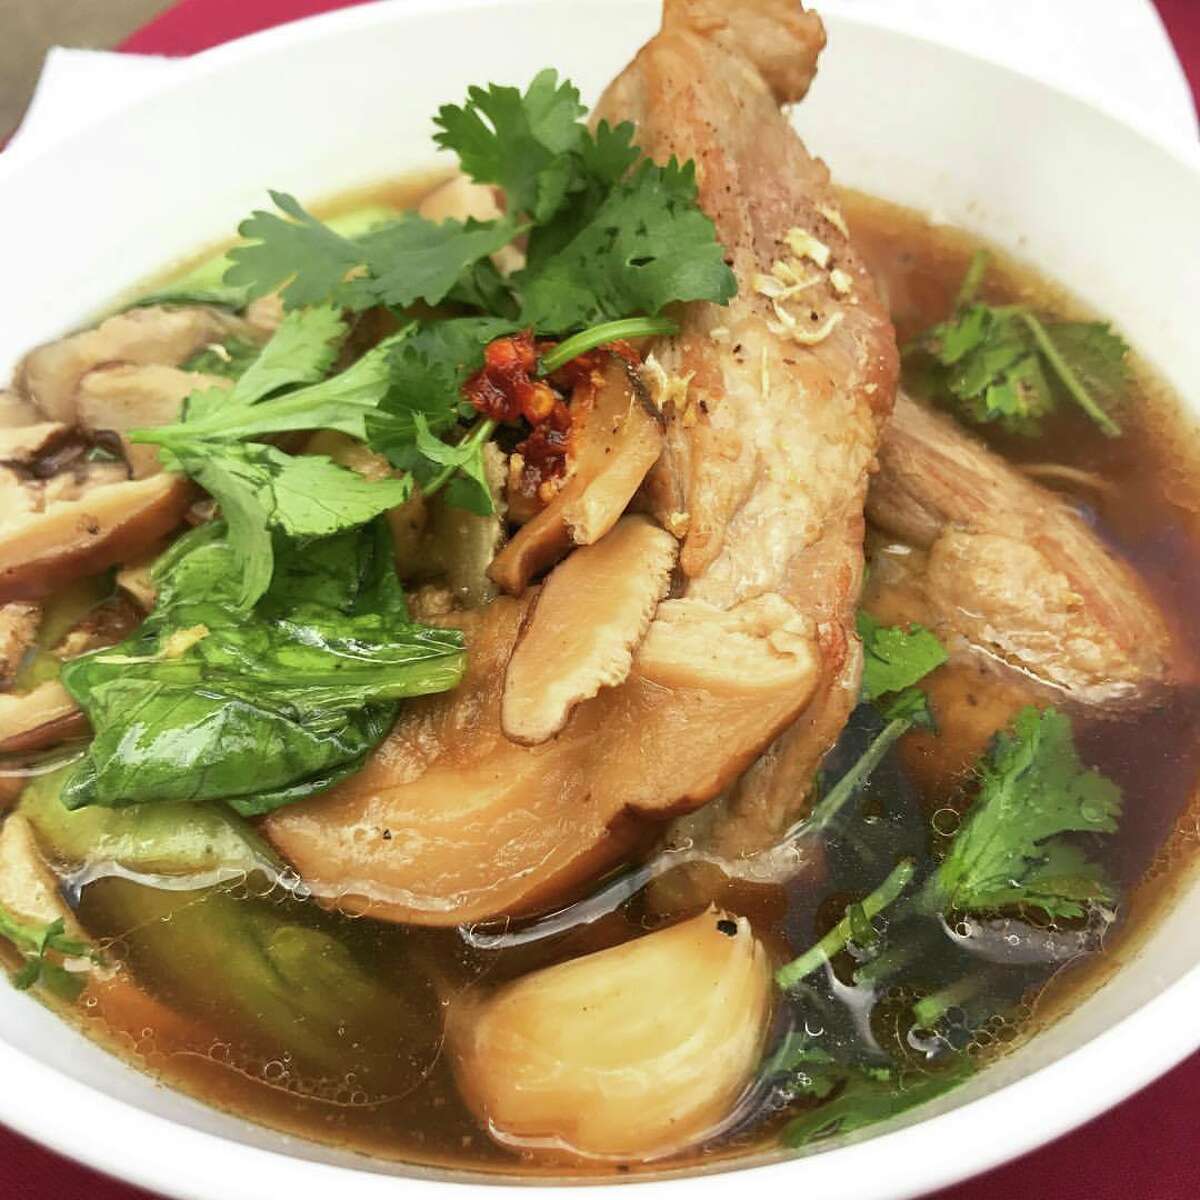 Bak Kut Teh (pork bone noodle soup) will be served at Sing, a new Singaporean-inspired restaurant opening in the Garden Oaks/Oak Forest neighborhood in spring 2018.